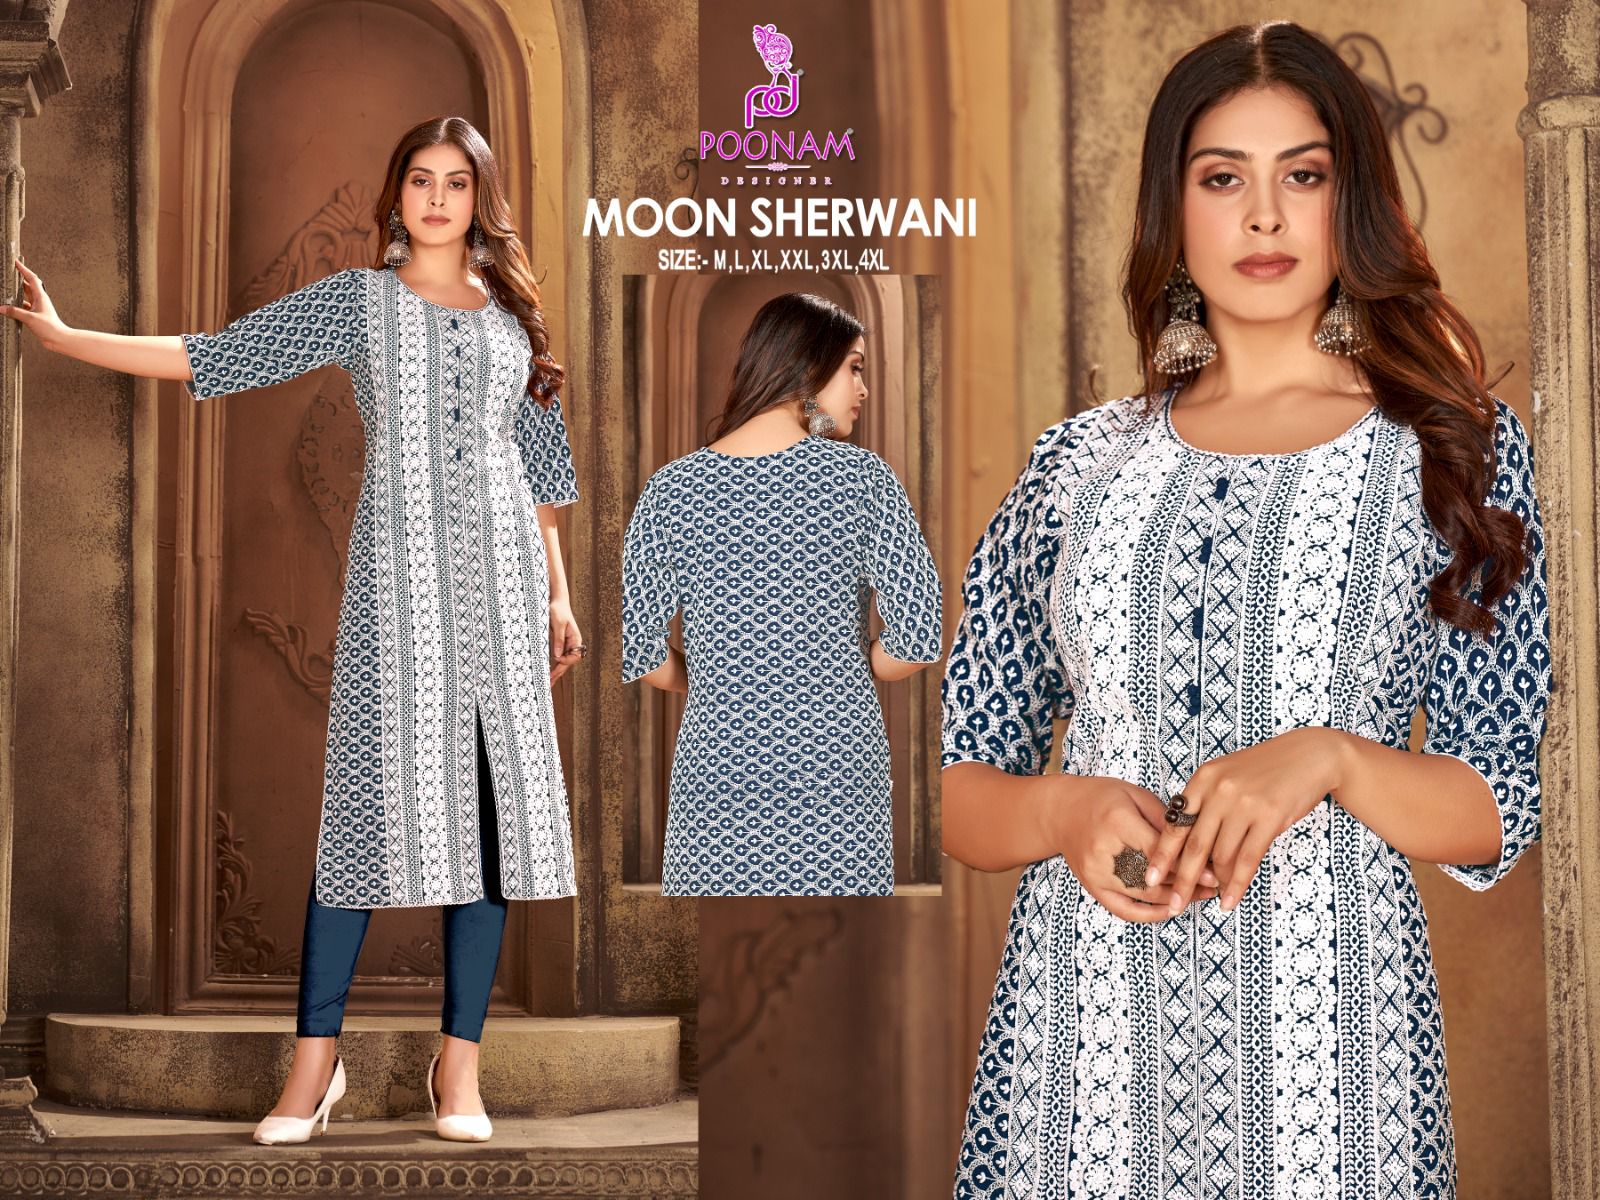 Poonam Designer Moon Sherwani 1004